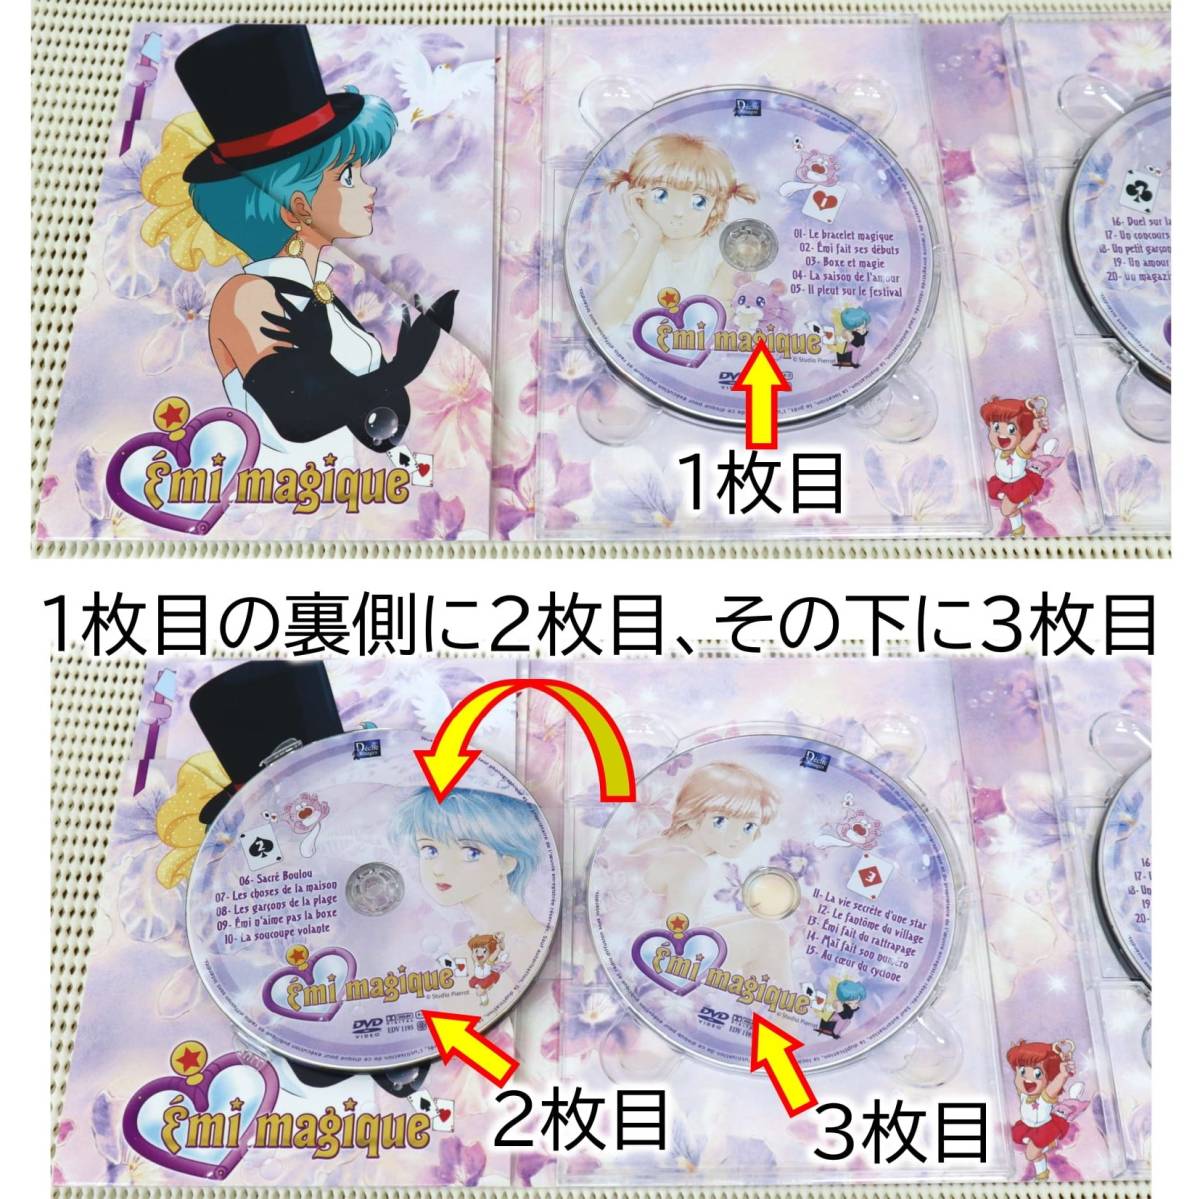 【DVD8枚】魔法のスター マジカルエミ 全話 コンプリートBOX (欧州正規品・映像方式PAL・全ディスク再生確認)